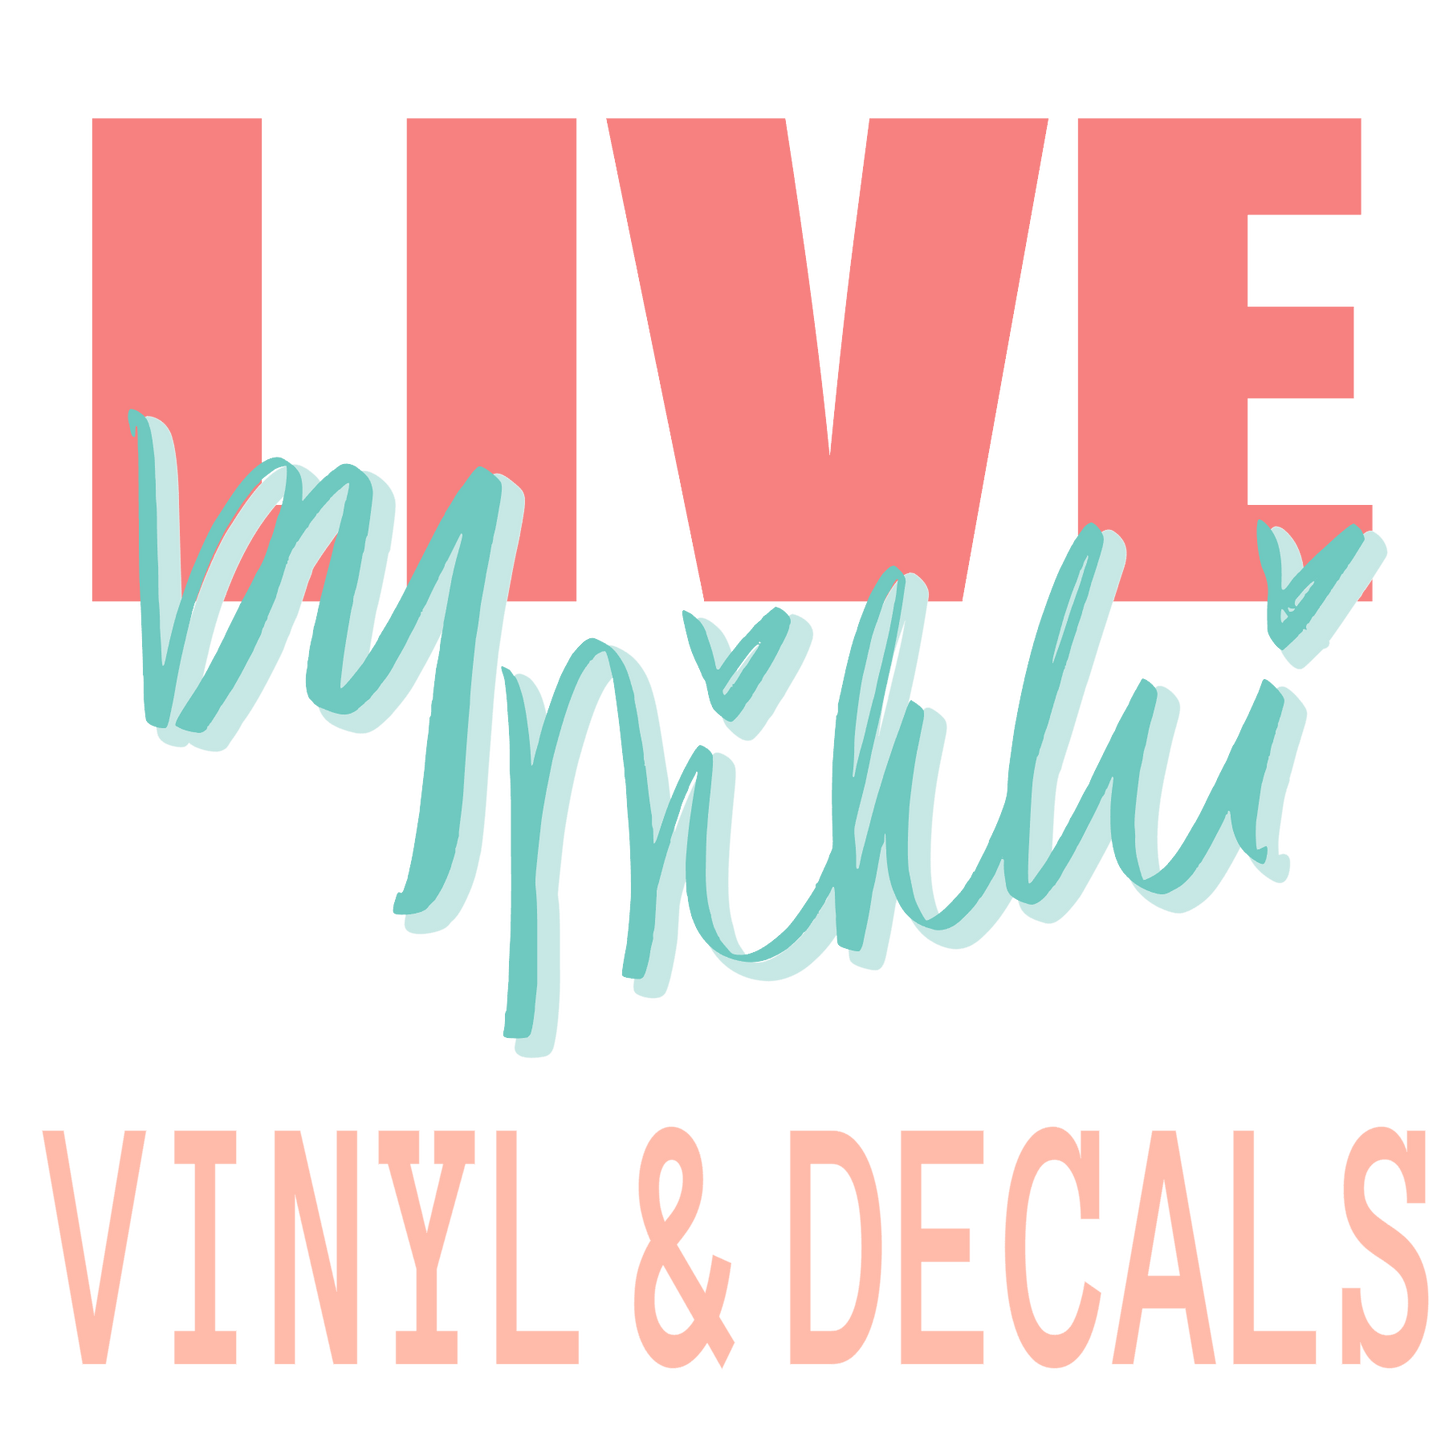 Live By Nikki Vinyl and Decals